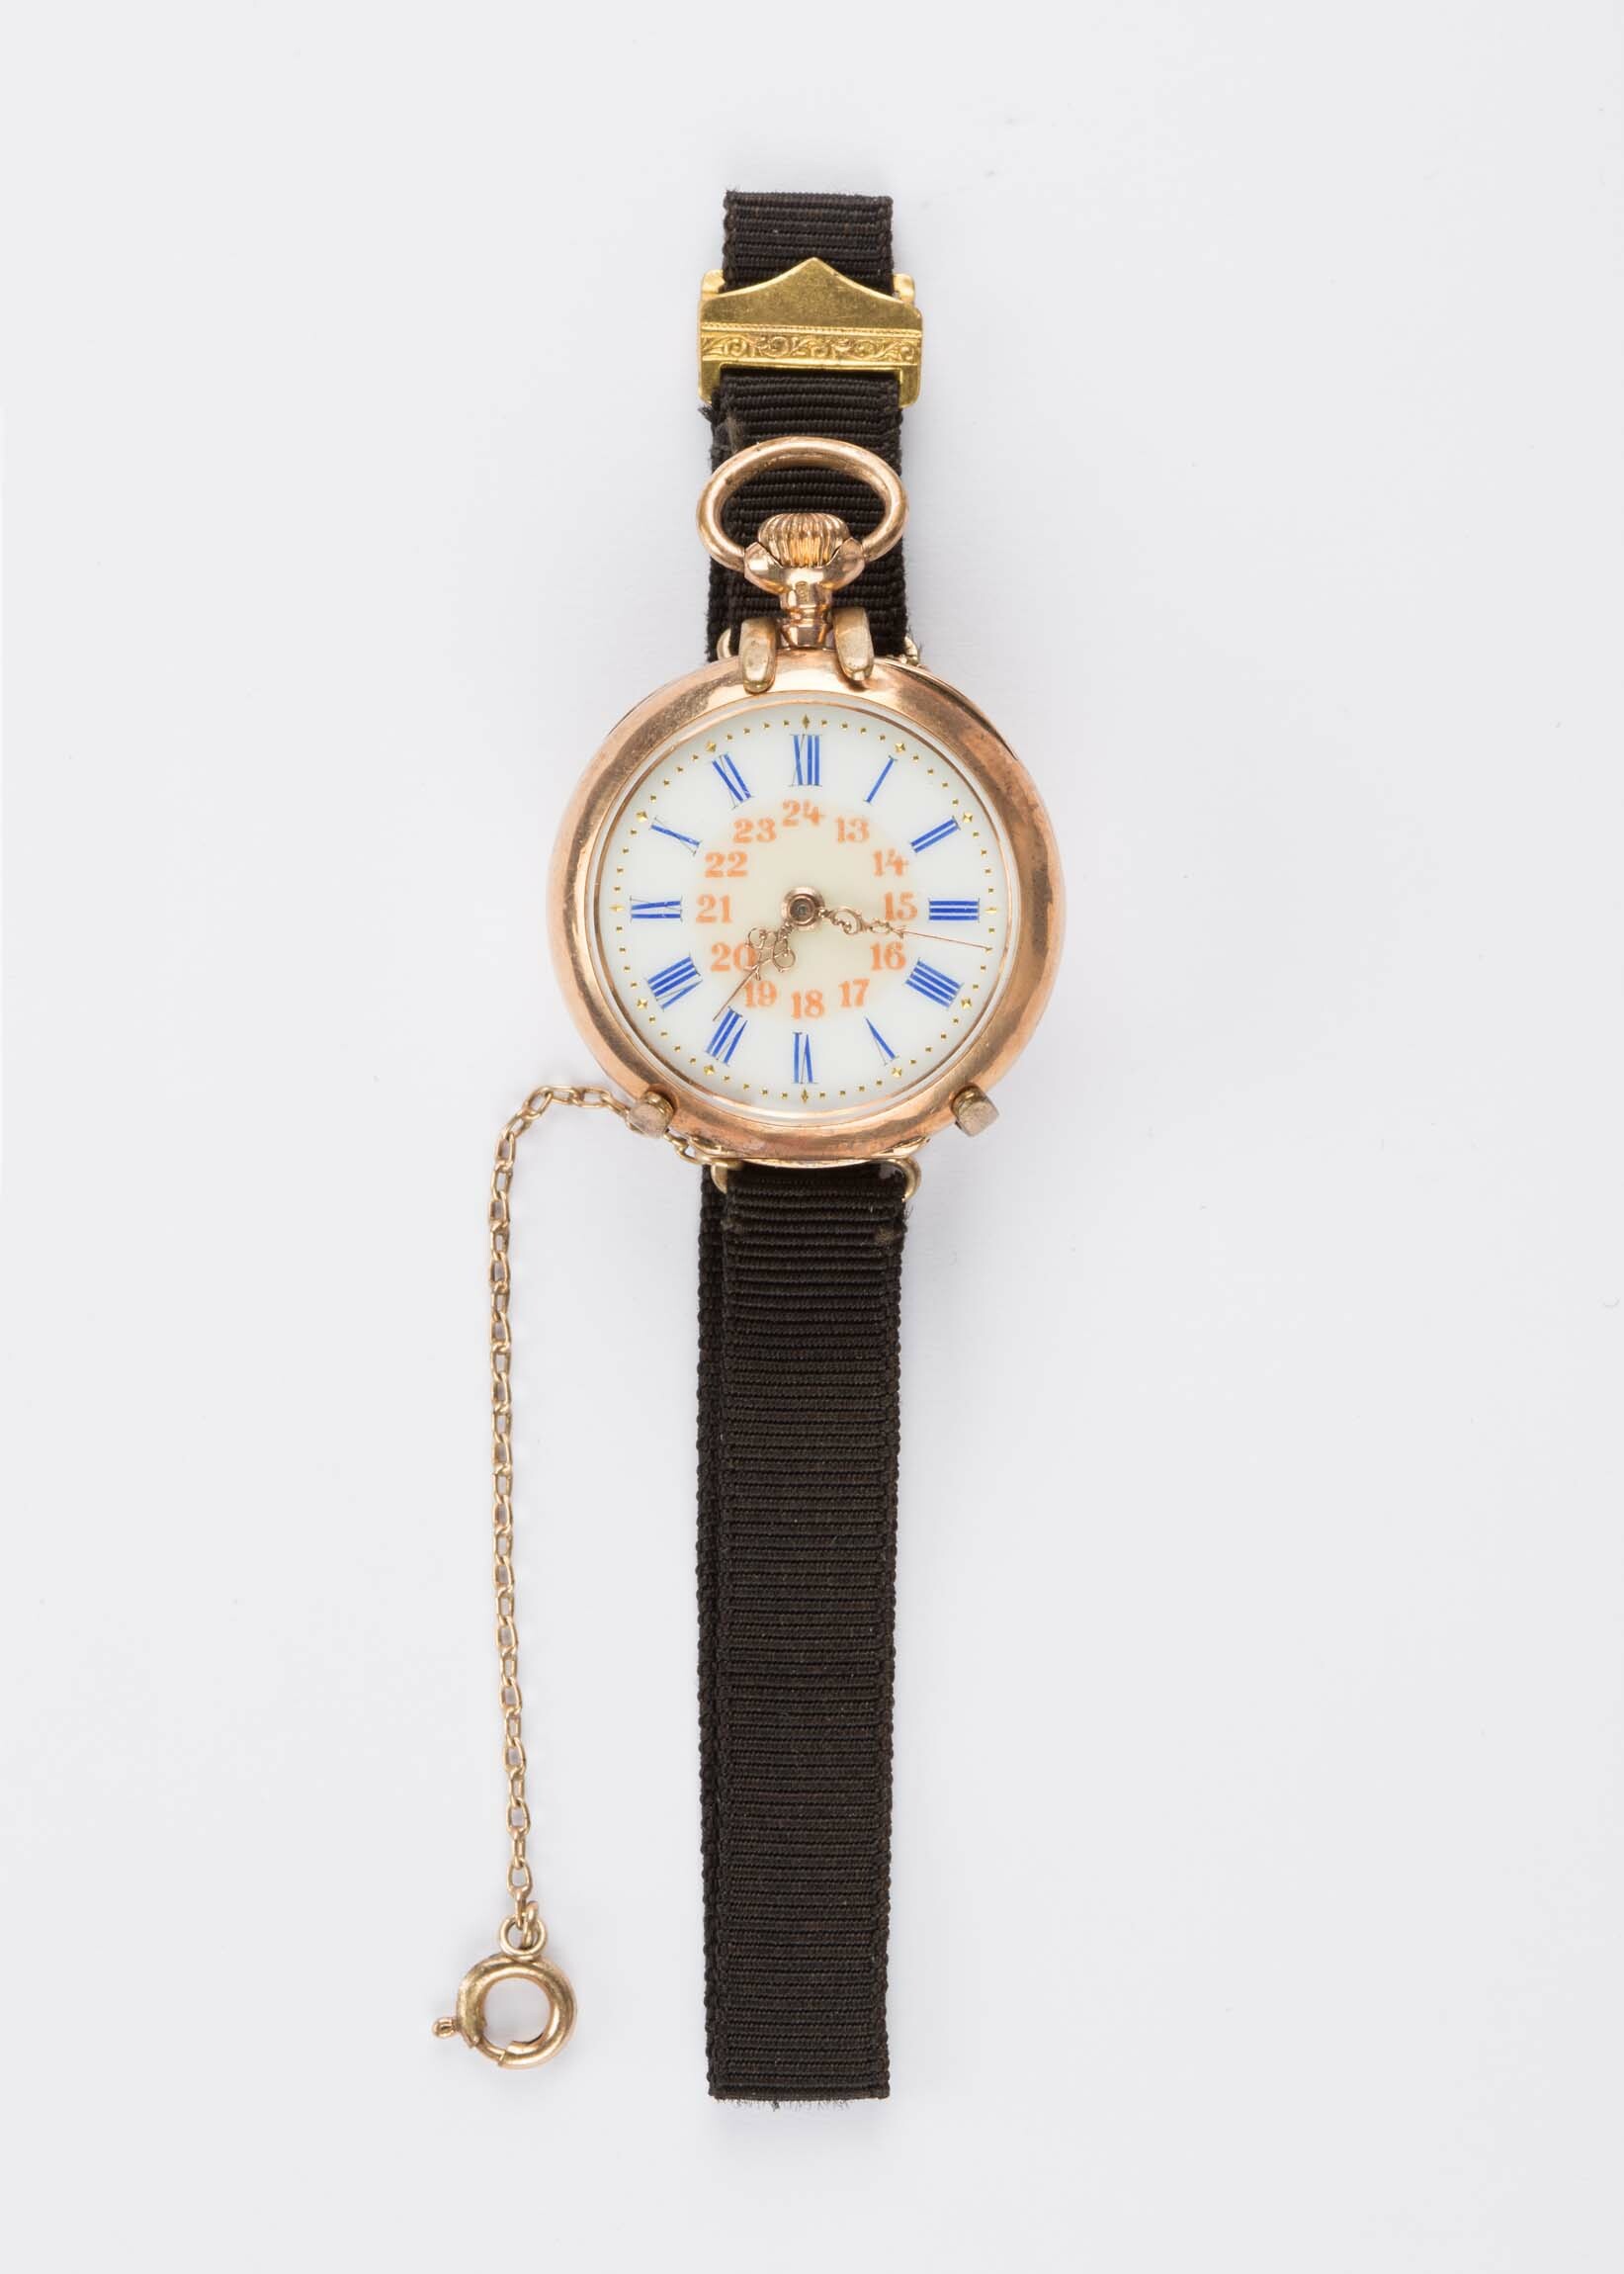 Taschenuhr, wohl La Chaux-de-Fonds, um 1900 (Deutsches Uhrenmuseum CC BY-SA)